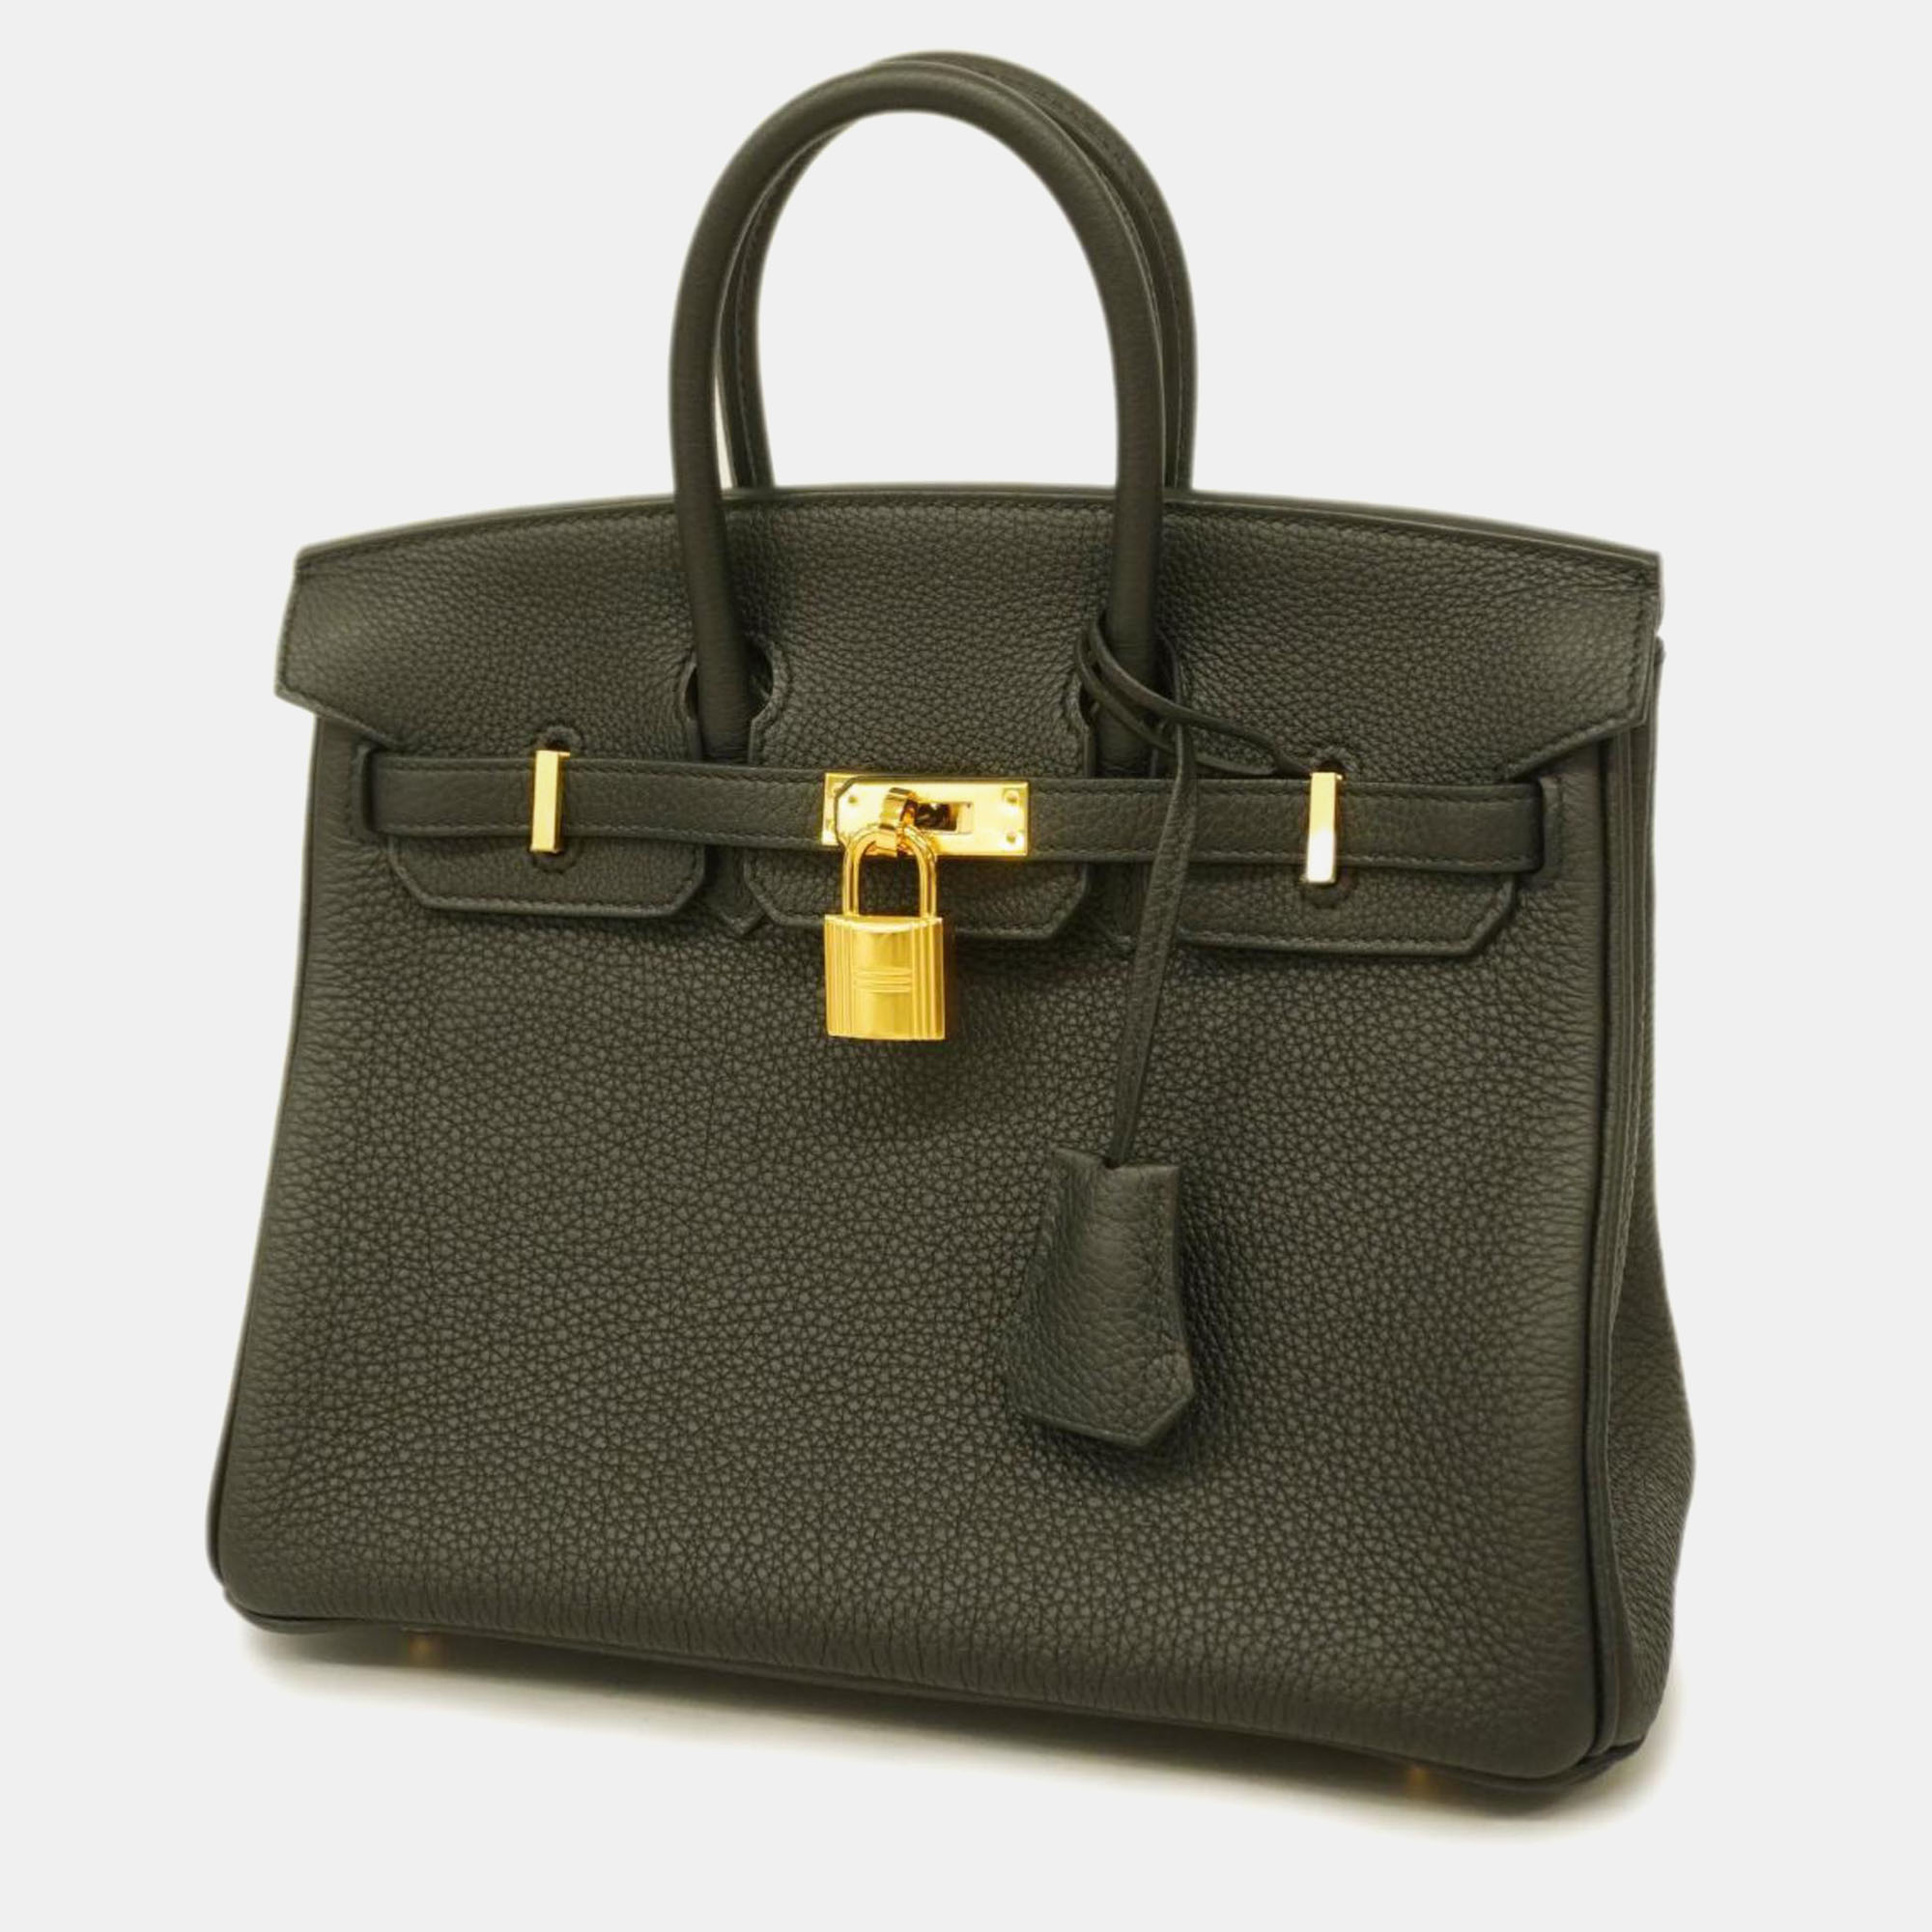 Hermes black togo birkin stamp handbag